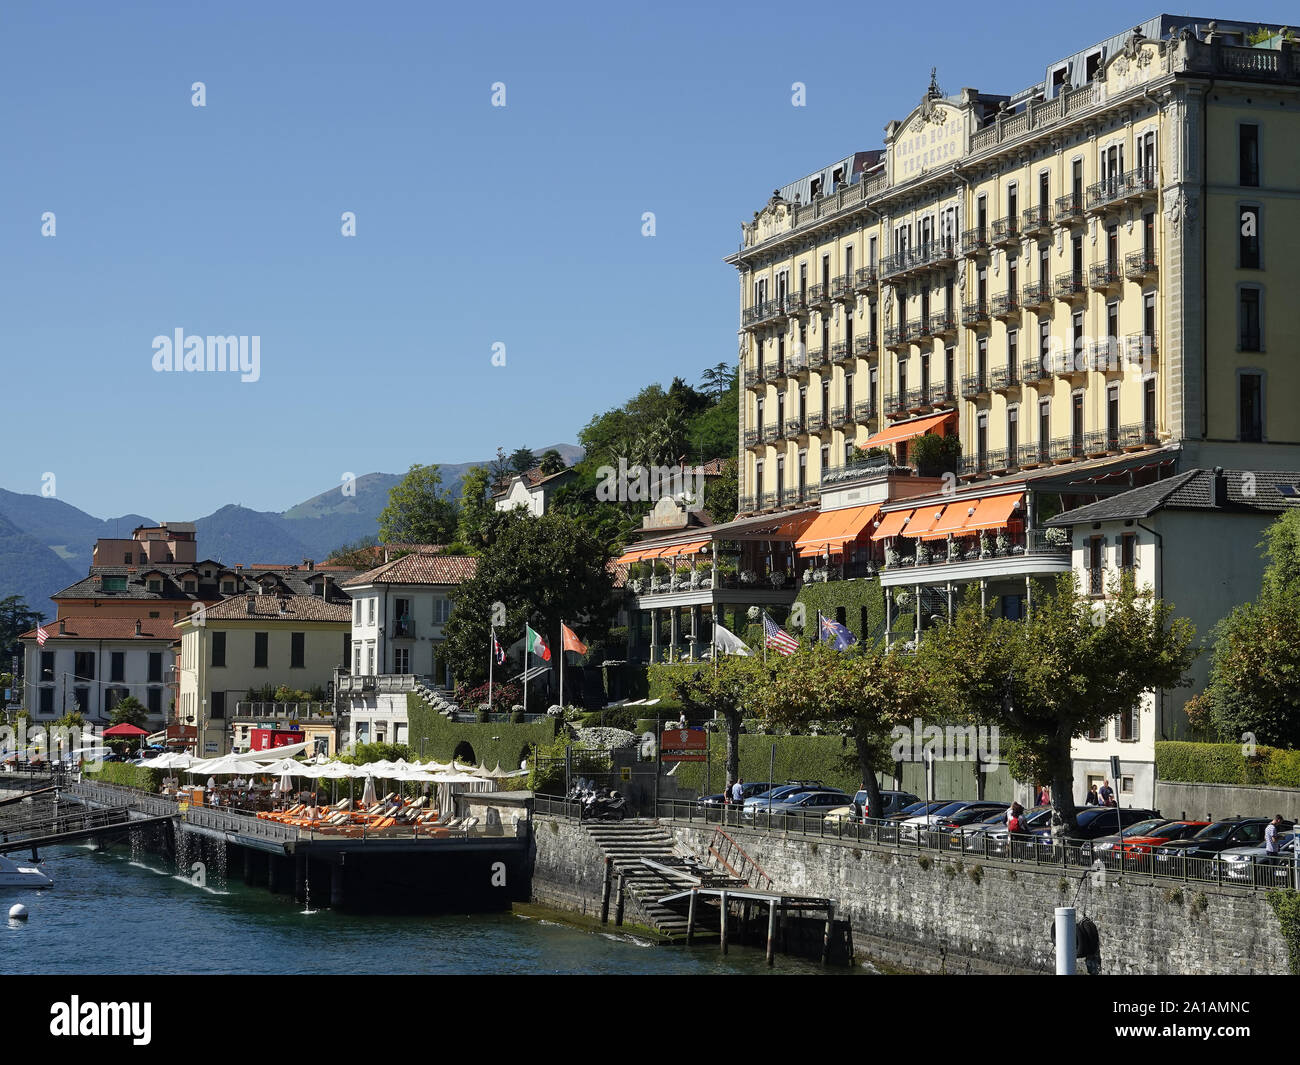 Grand Hotel Tremezzo on Italy's iconic and beautiful Lake Como,Italy Stock Photo